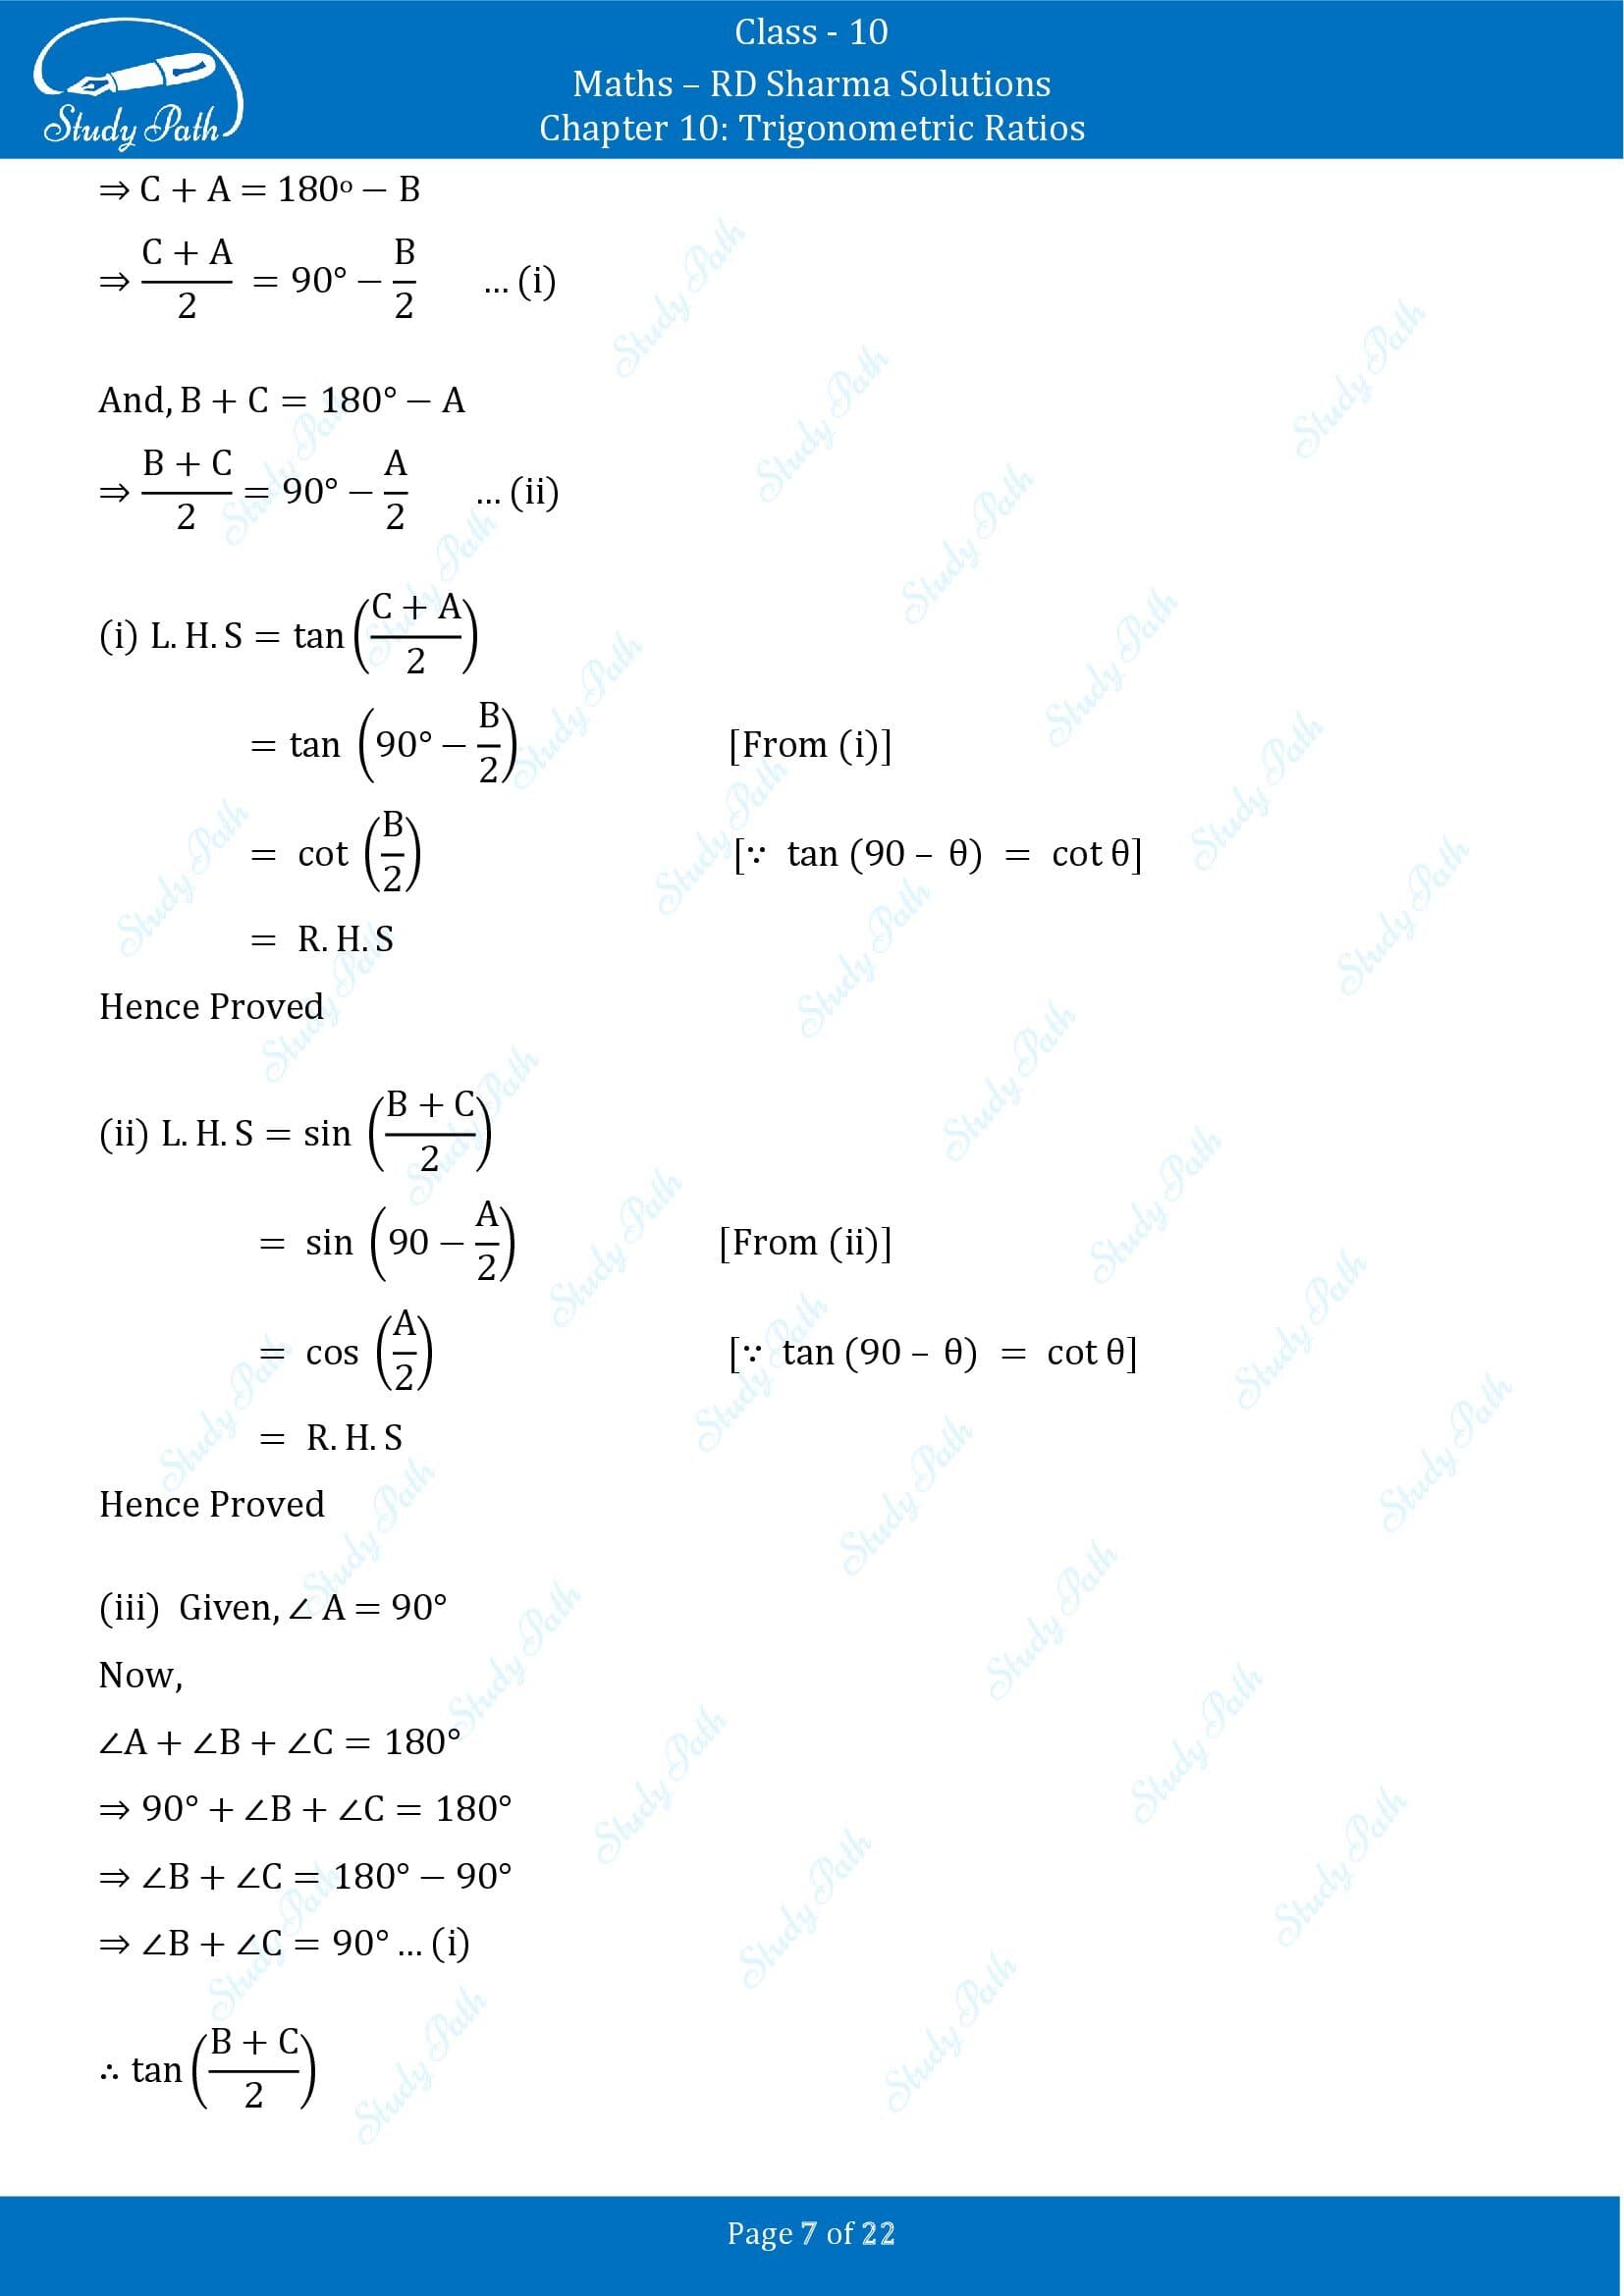 RD Sharma Solutions Class 10 Chapter 10 Trigonometric Ratios Exercise 10.3 00007